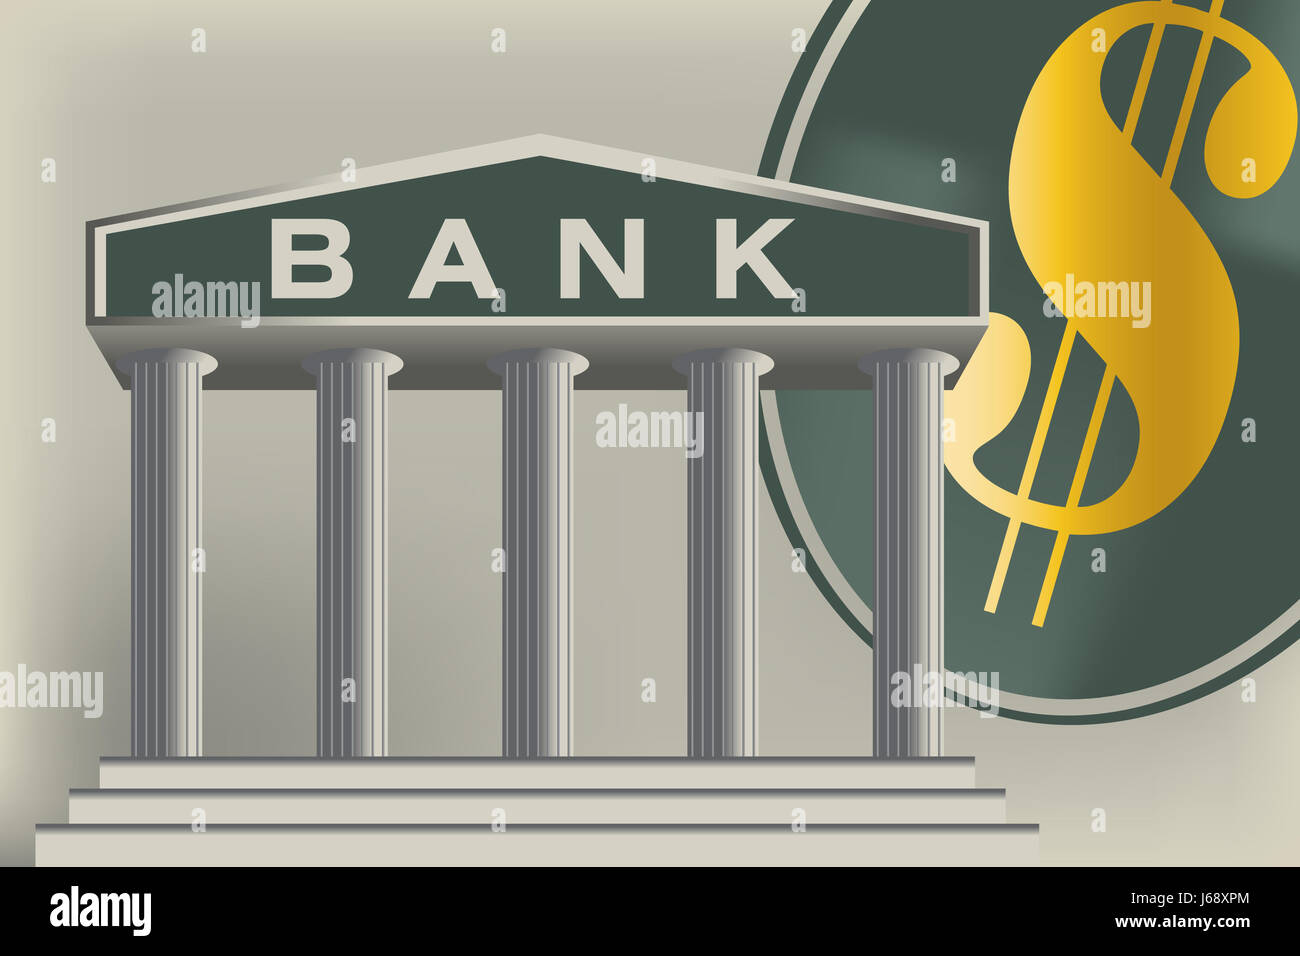 Bank pp. Банк рисунок. Банк картинки для презентации. Тема банк. Картинки на банковскую тематику.